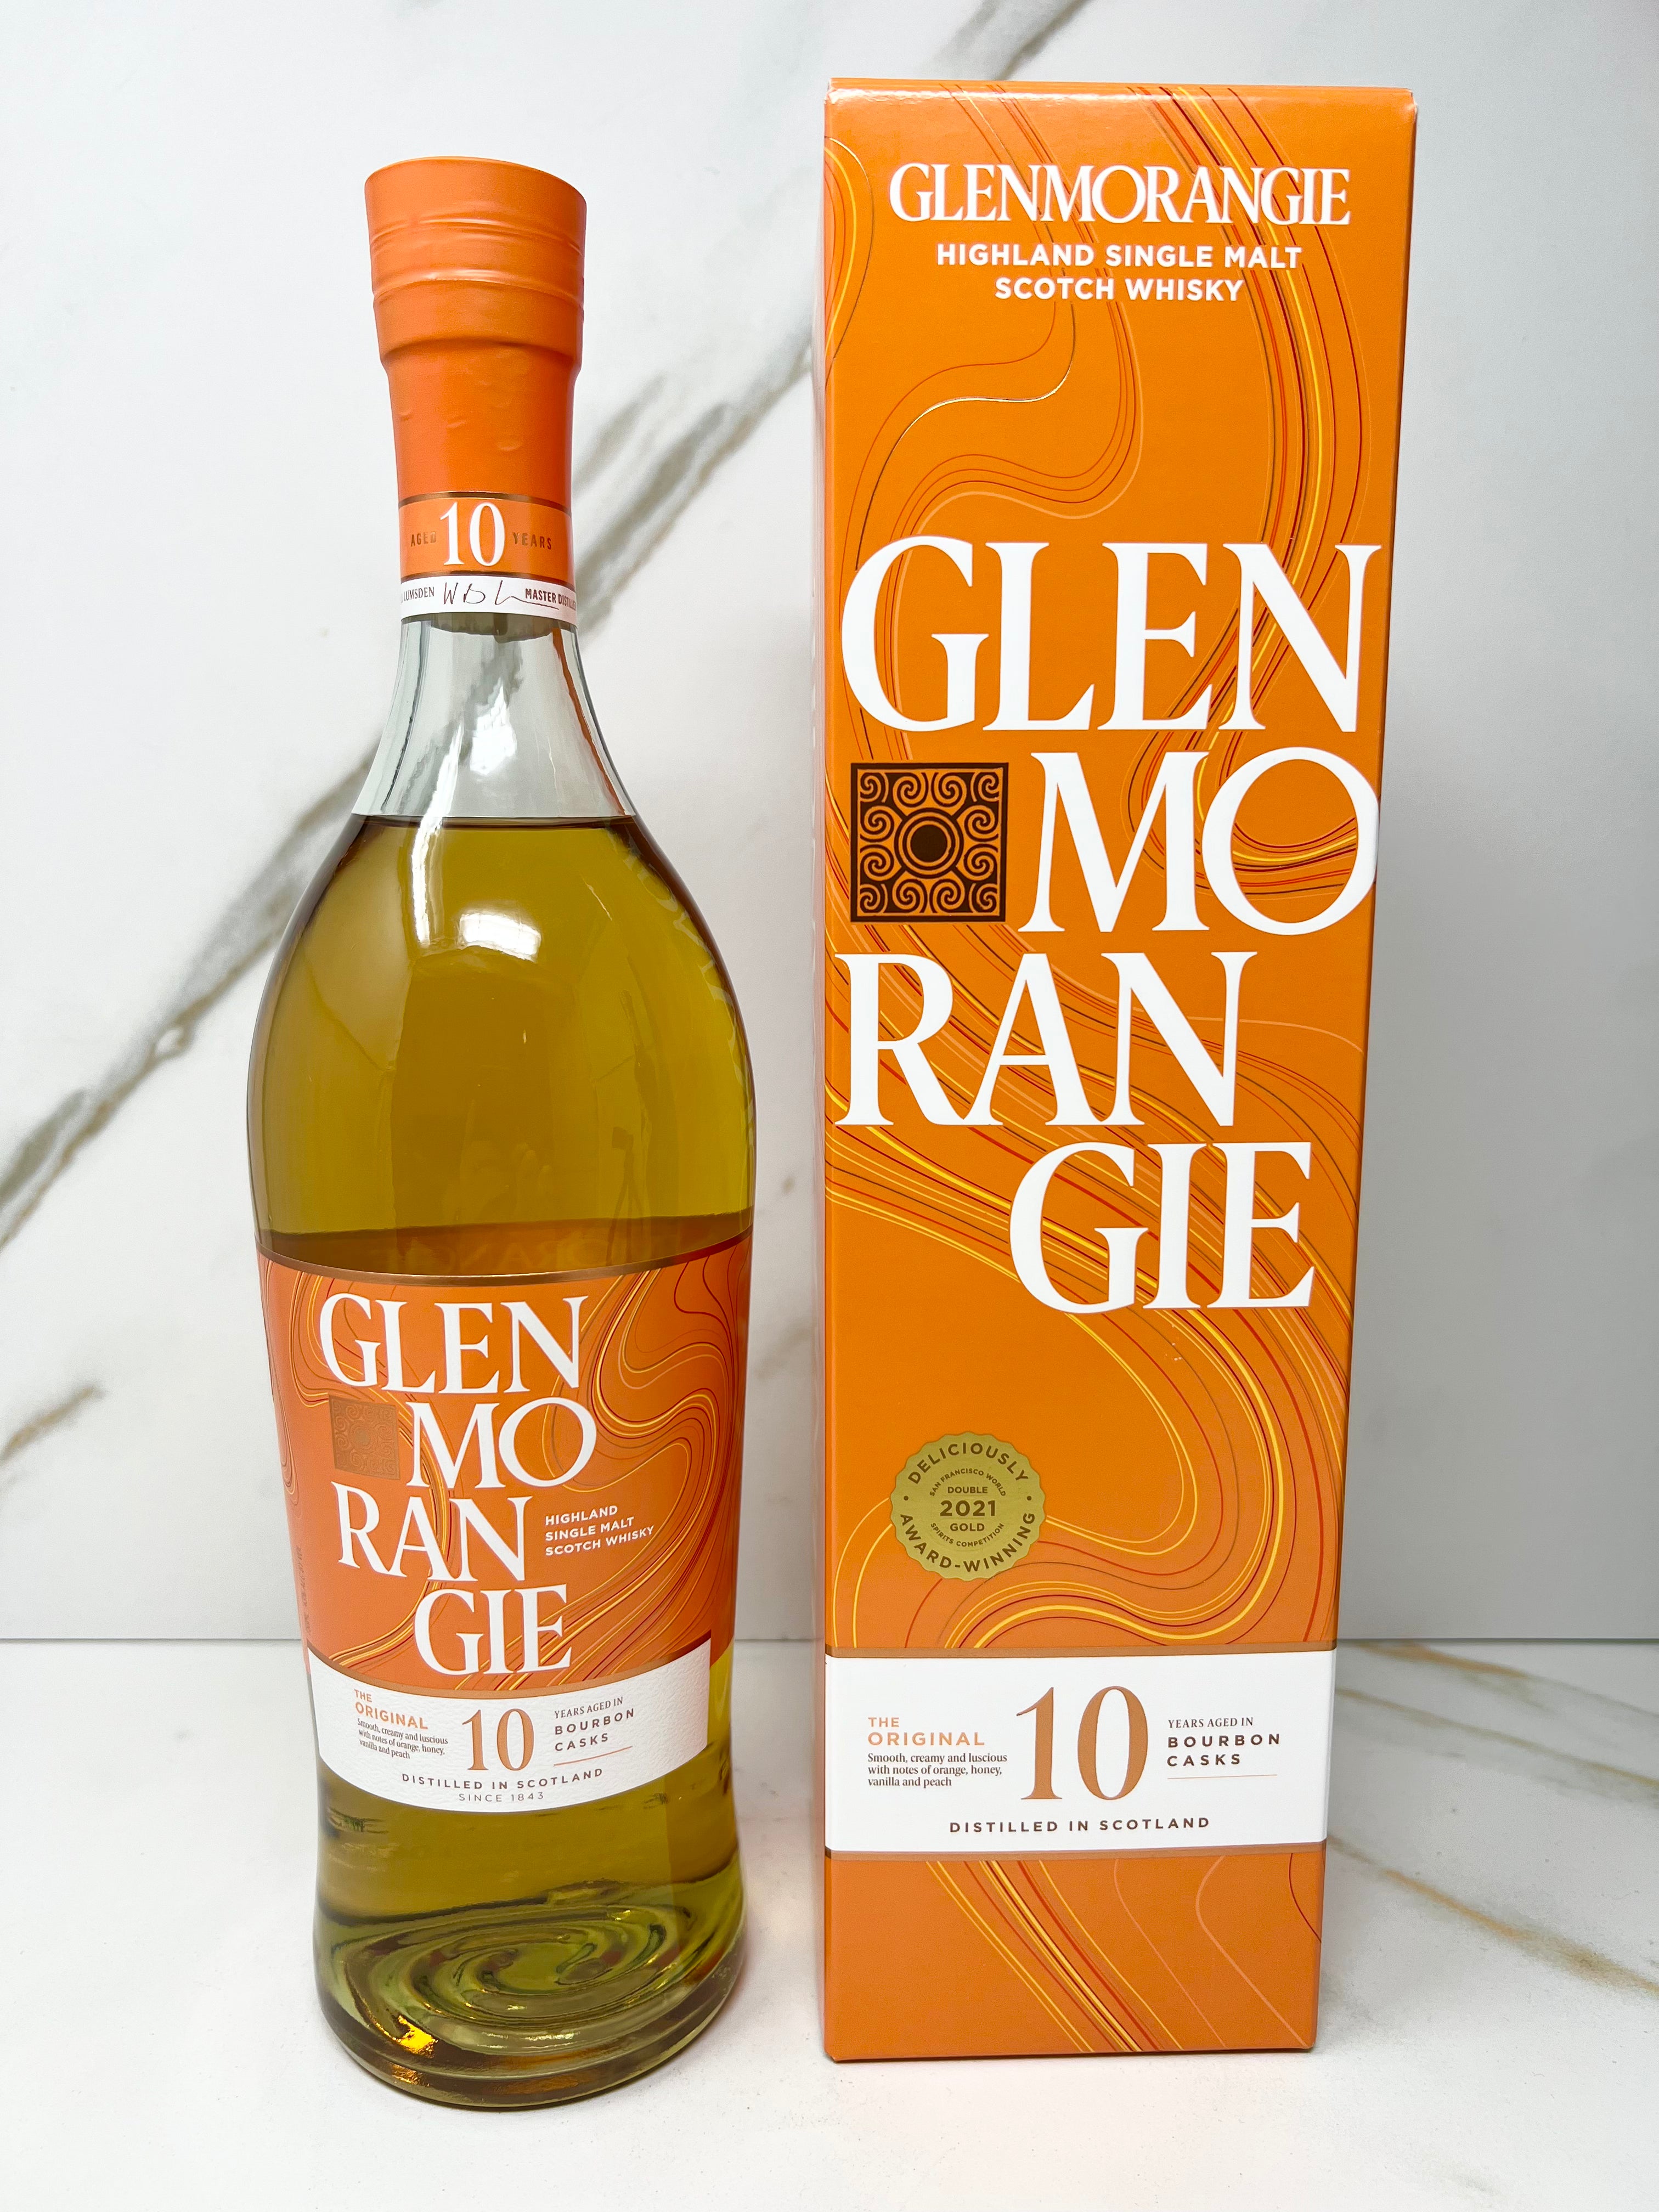 Glenmorangie The Original 1 Year Old Highland Single Malt Scotch